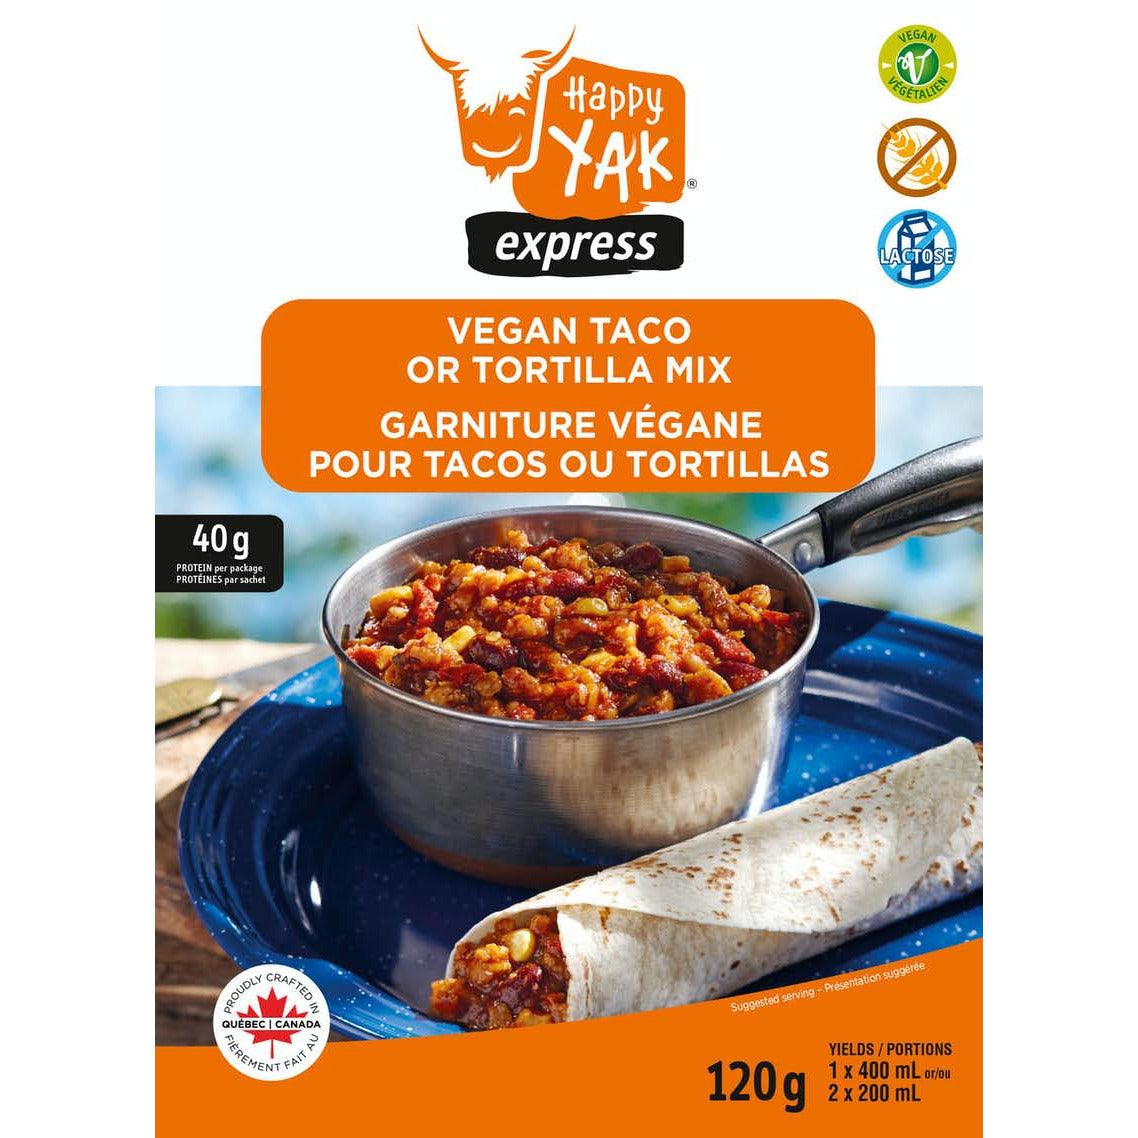 Happy Yak - Vegetarian Taco Mix